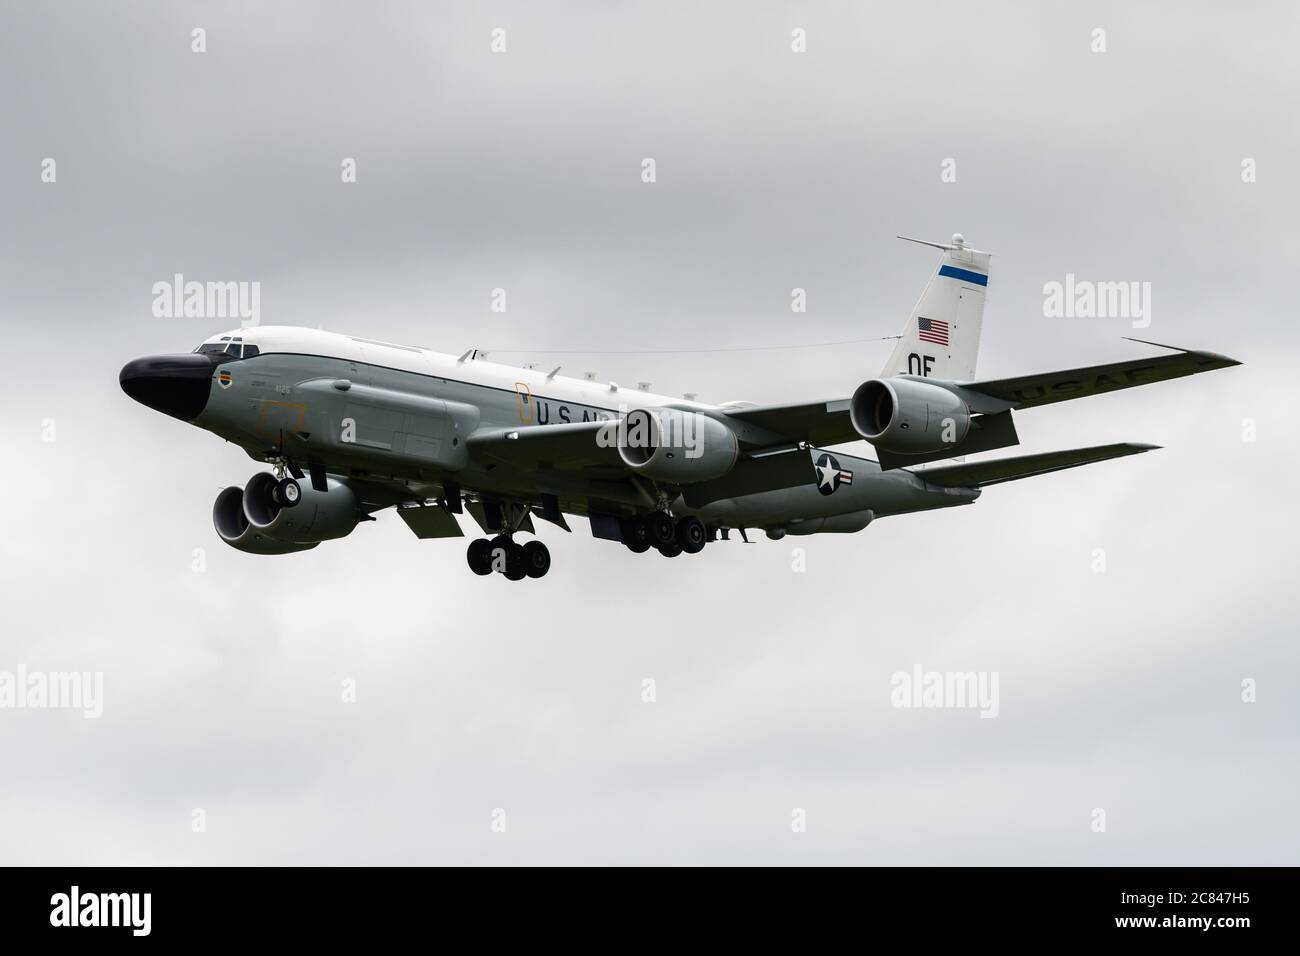 US Air Force RC-135 Rivet Joint aircraft Stock Photo